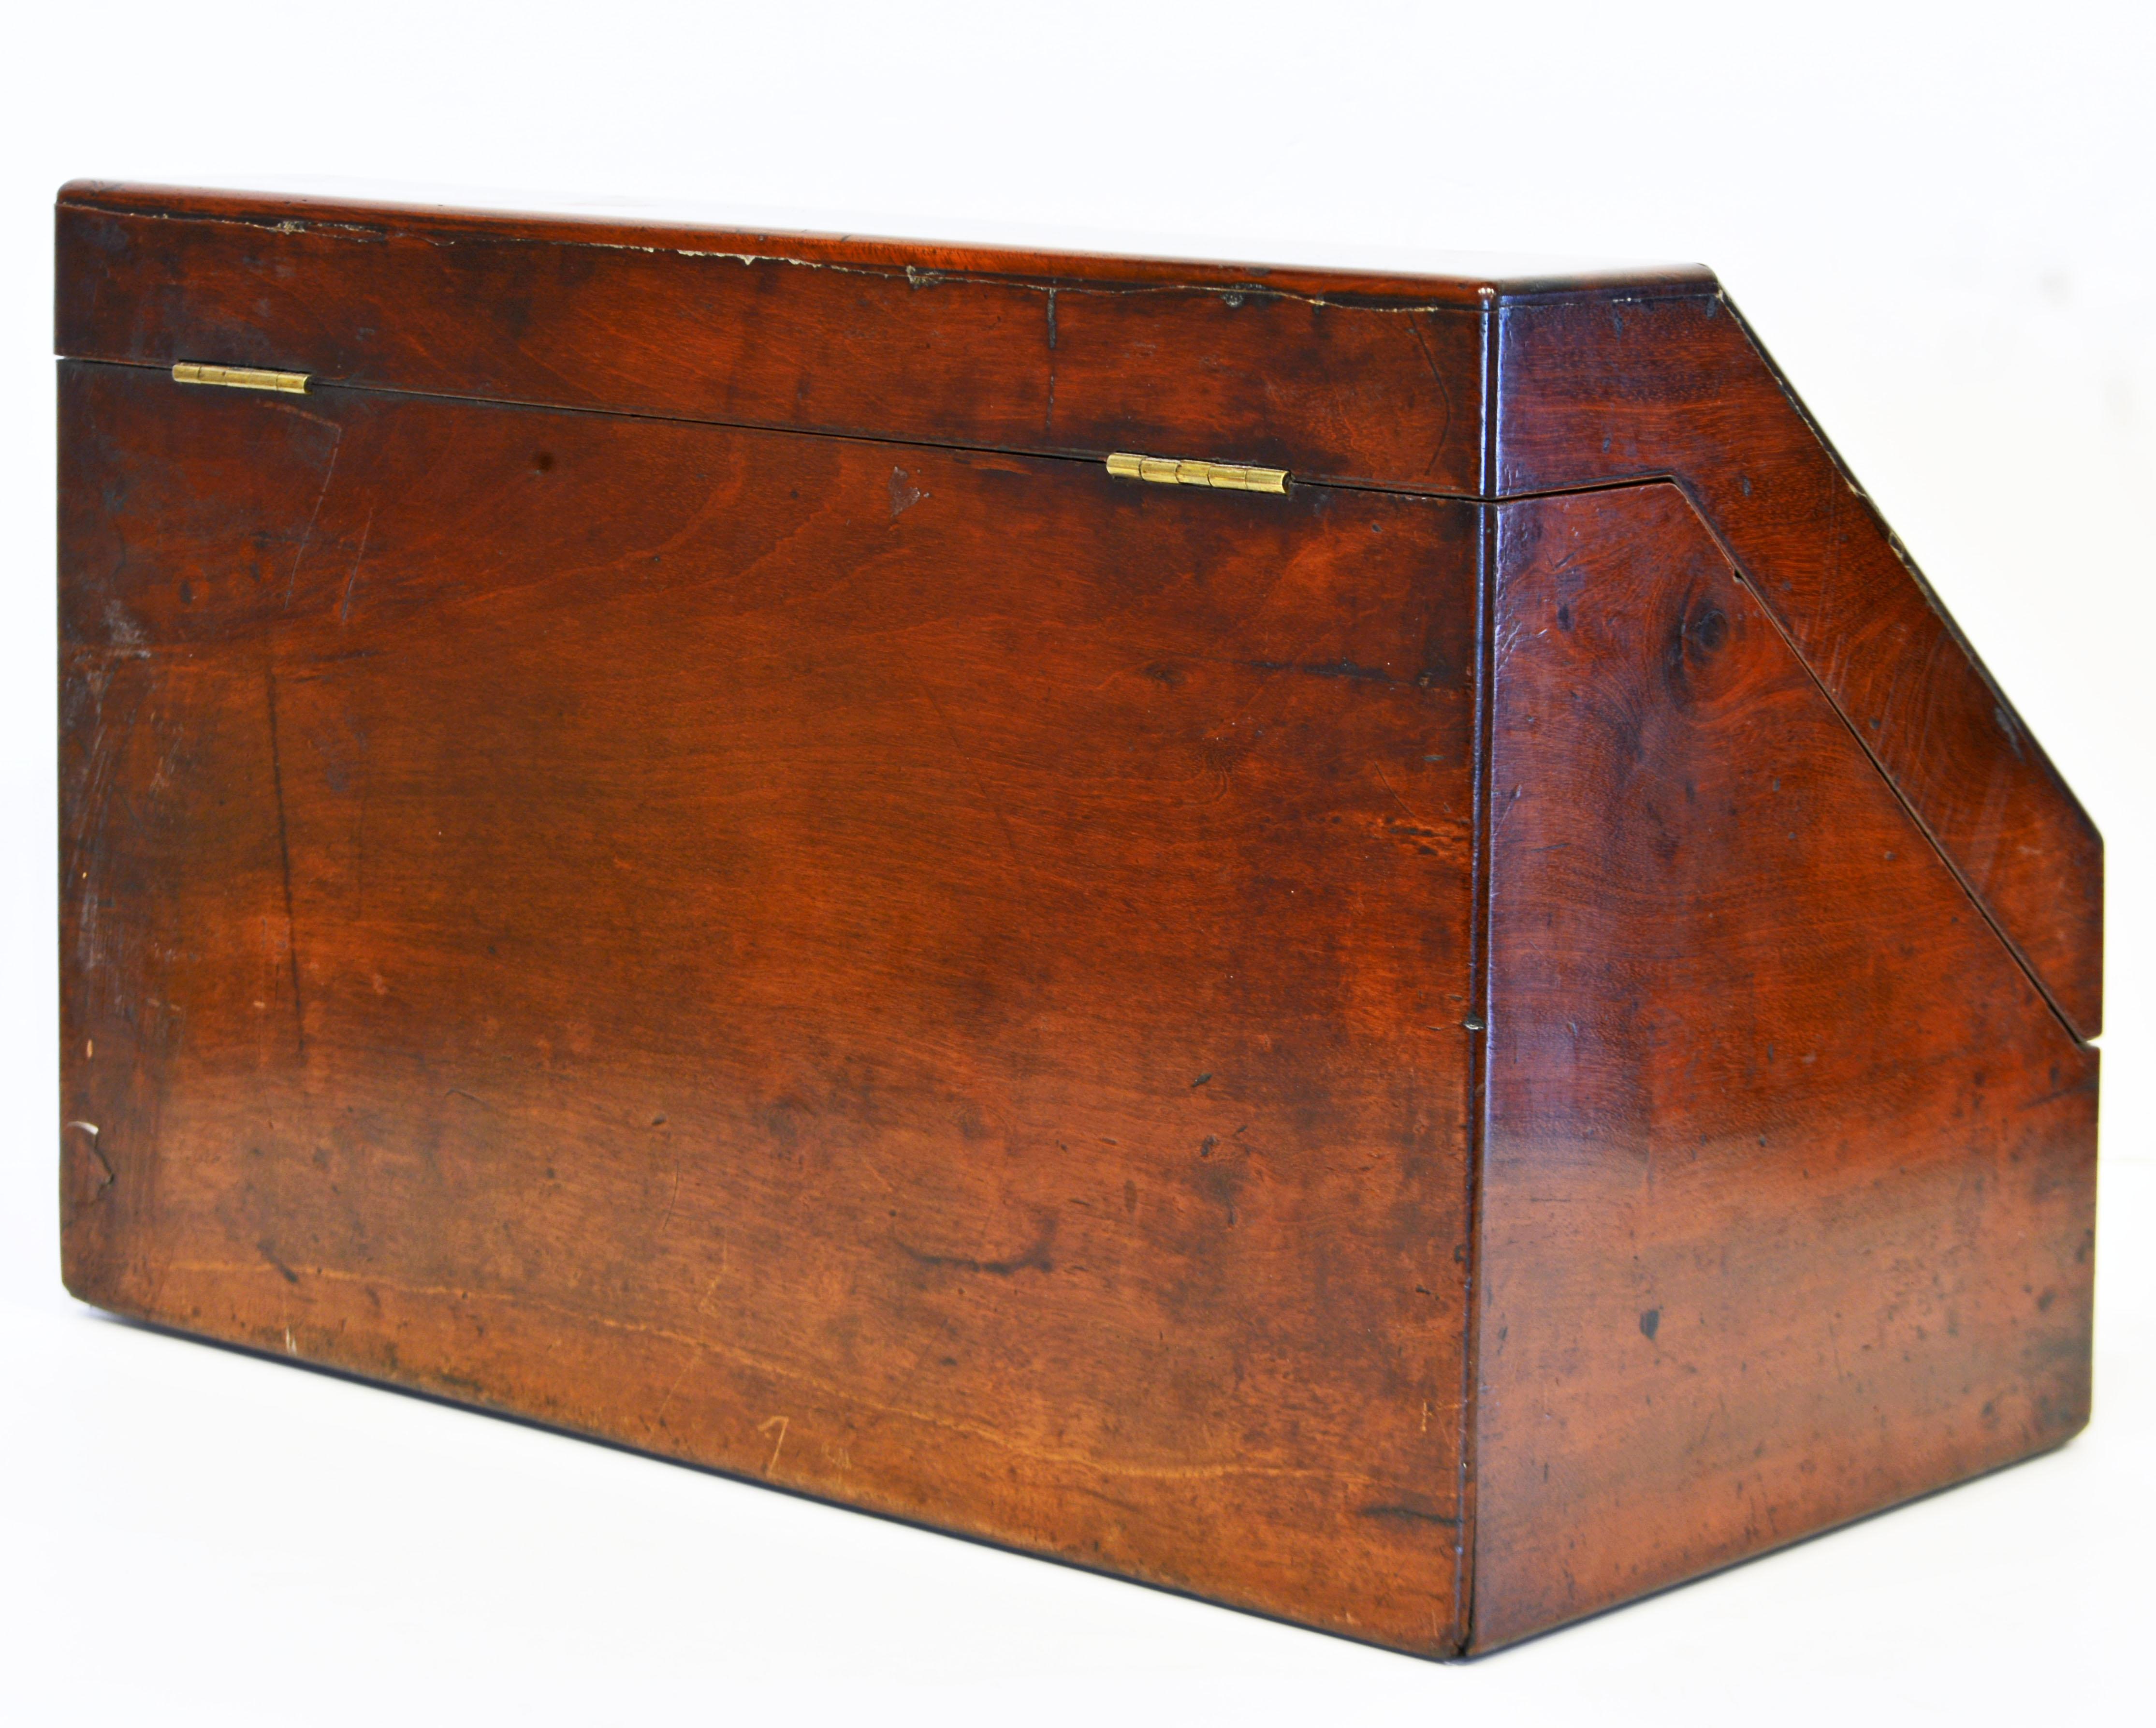 19th Century English Mahogany Slant Top Campaign Letter Box with Complete Interior Circa 1850